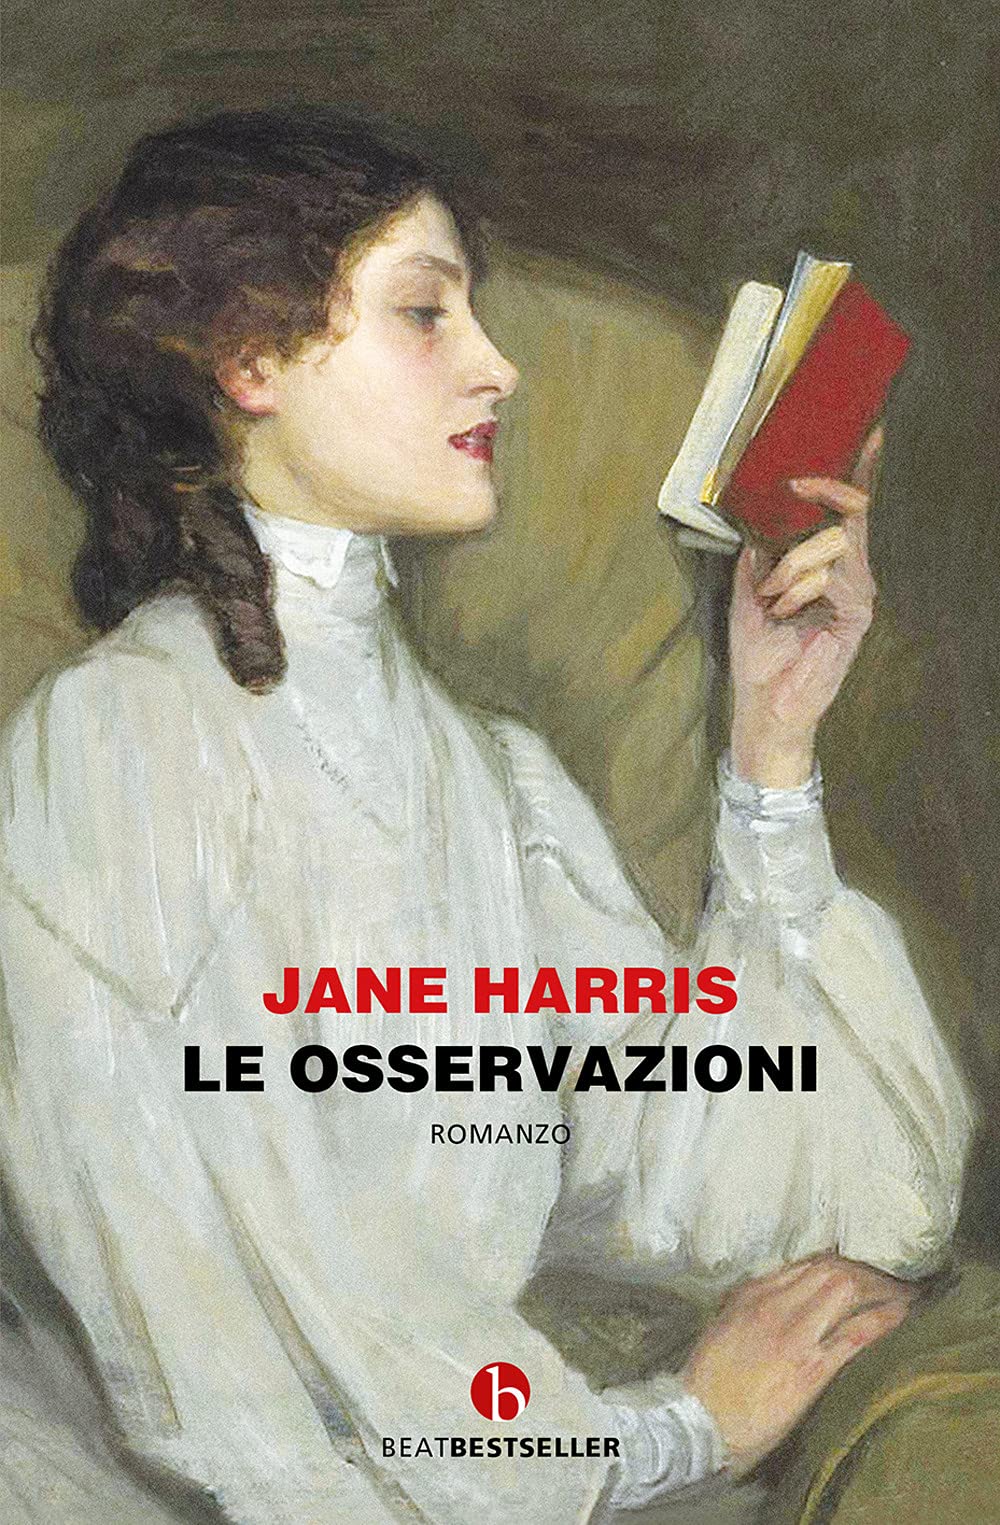 Le osservazioni - Jane Harris - BEAT